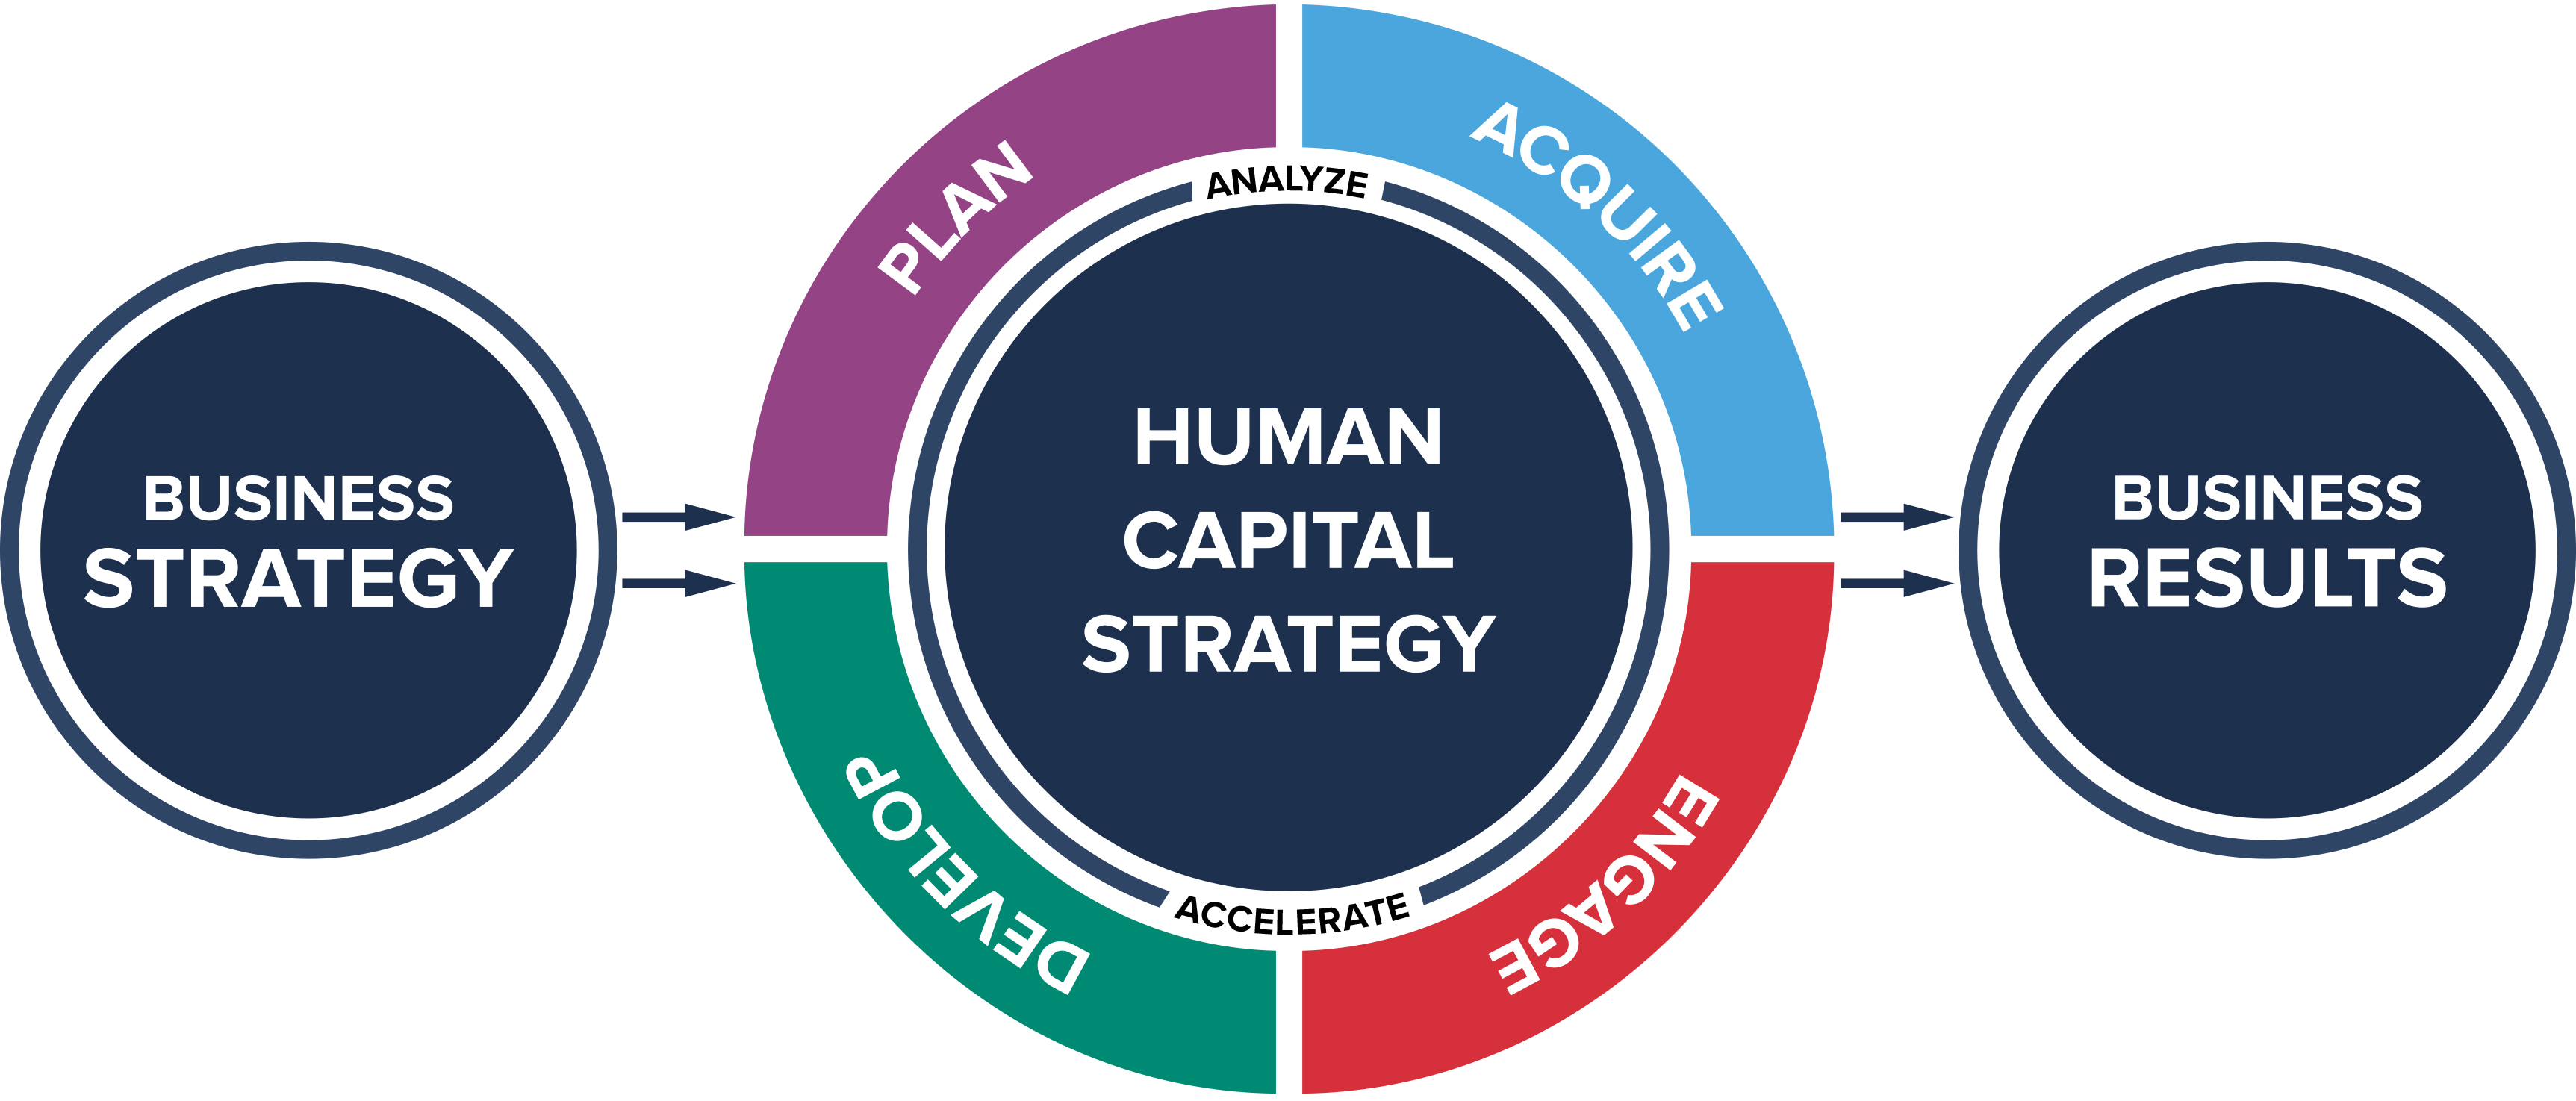 HCI Human Capital model updated